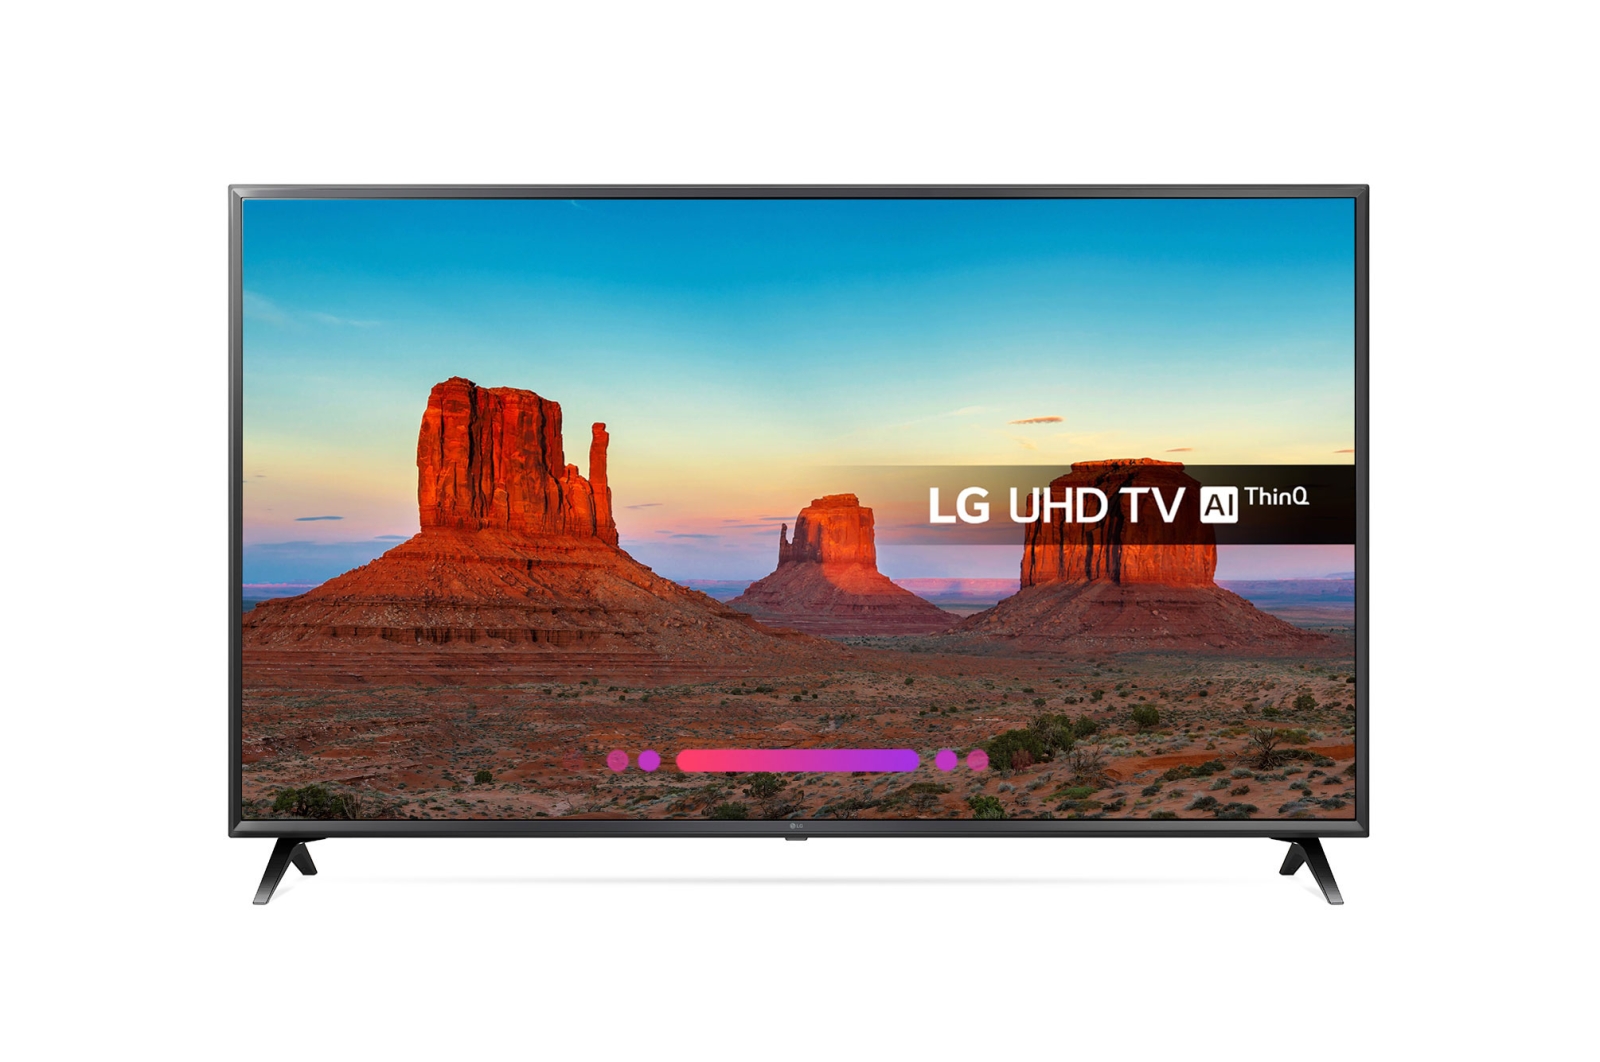 تلویزیون ULTRA HD 4K ال جی 55 اینچ 55UK6300PLB